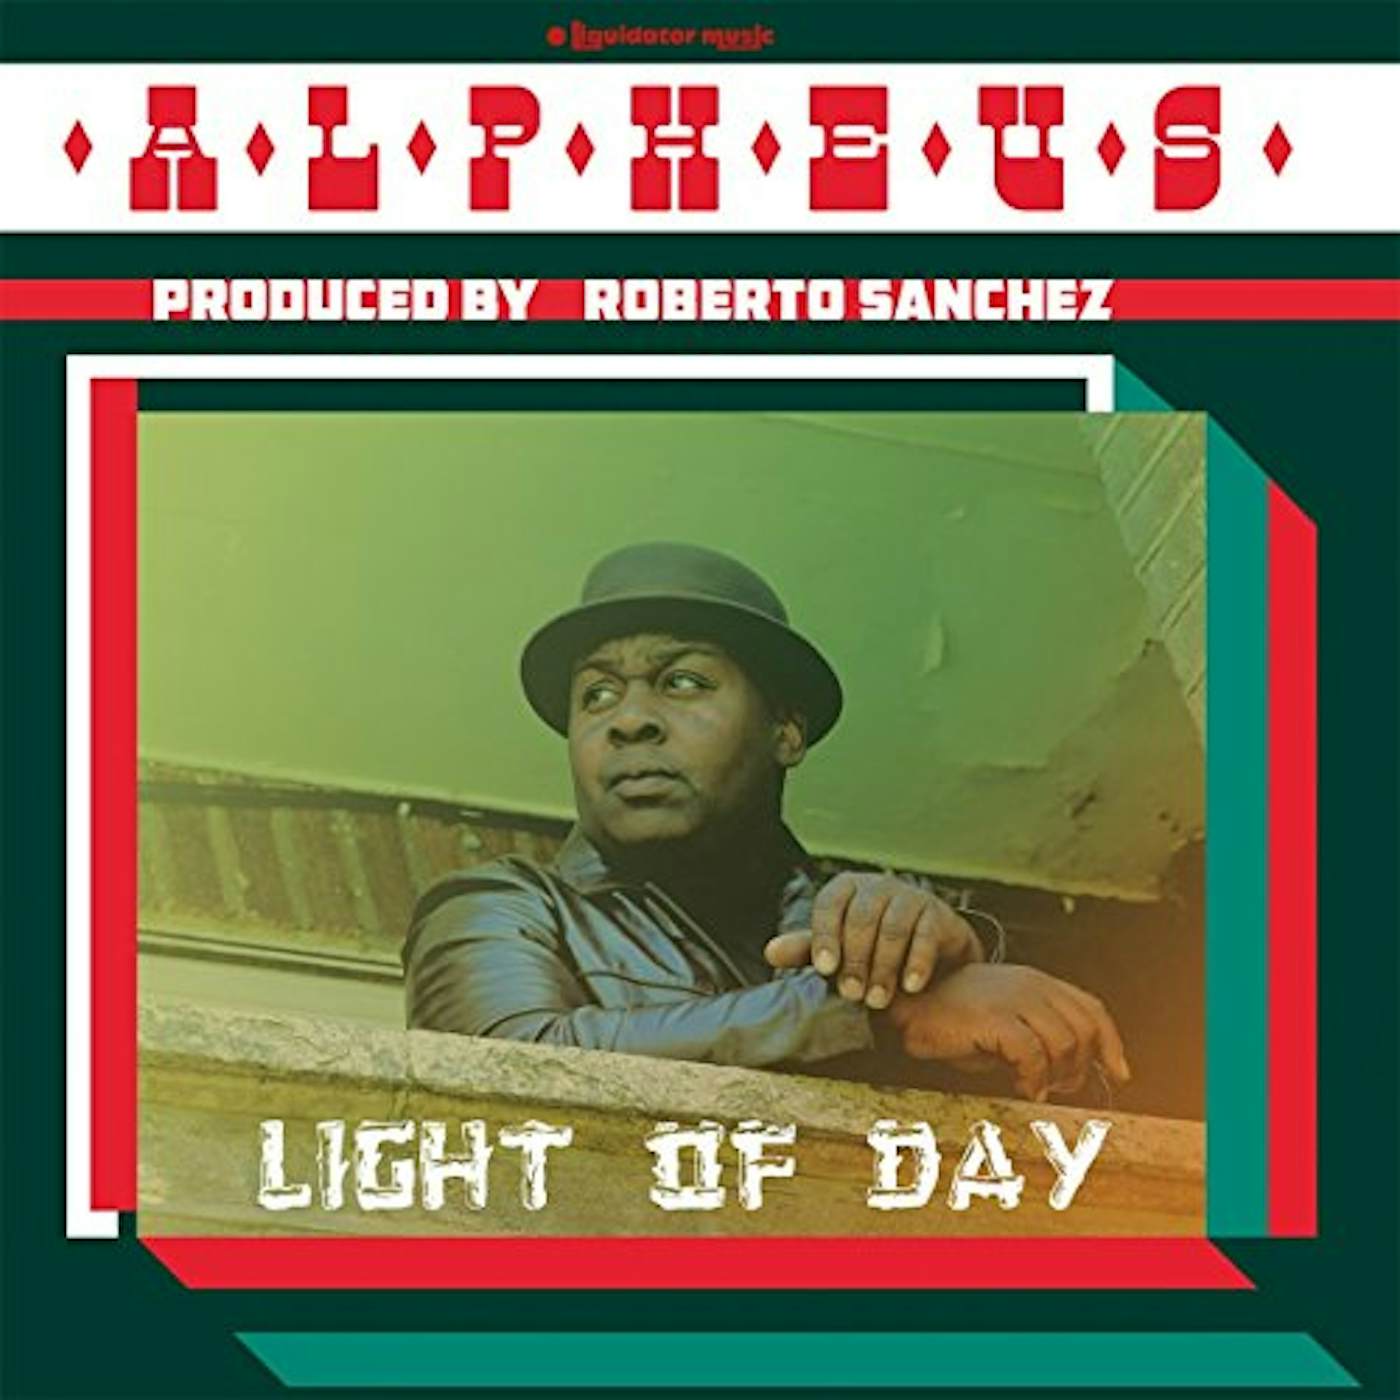 Alpheus LIGHT OF DAY CD